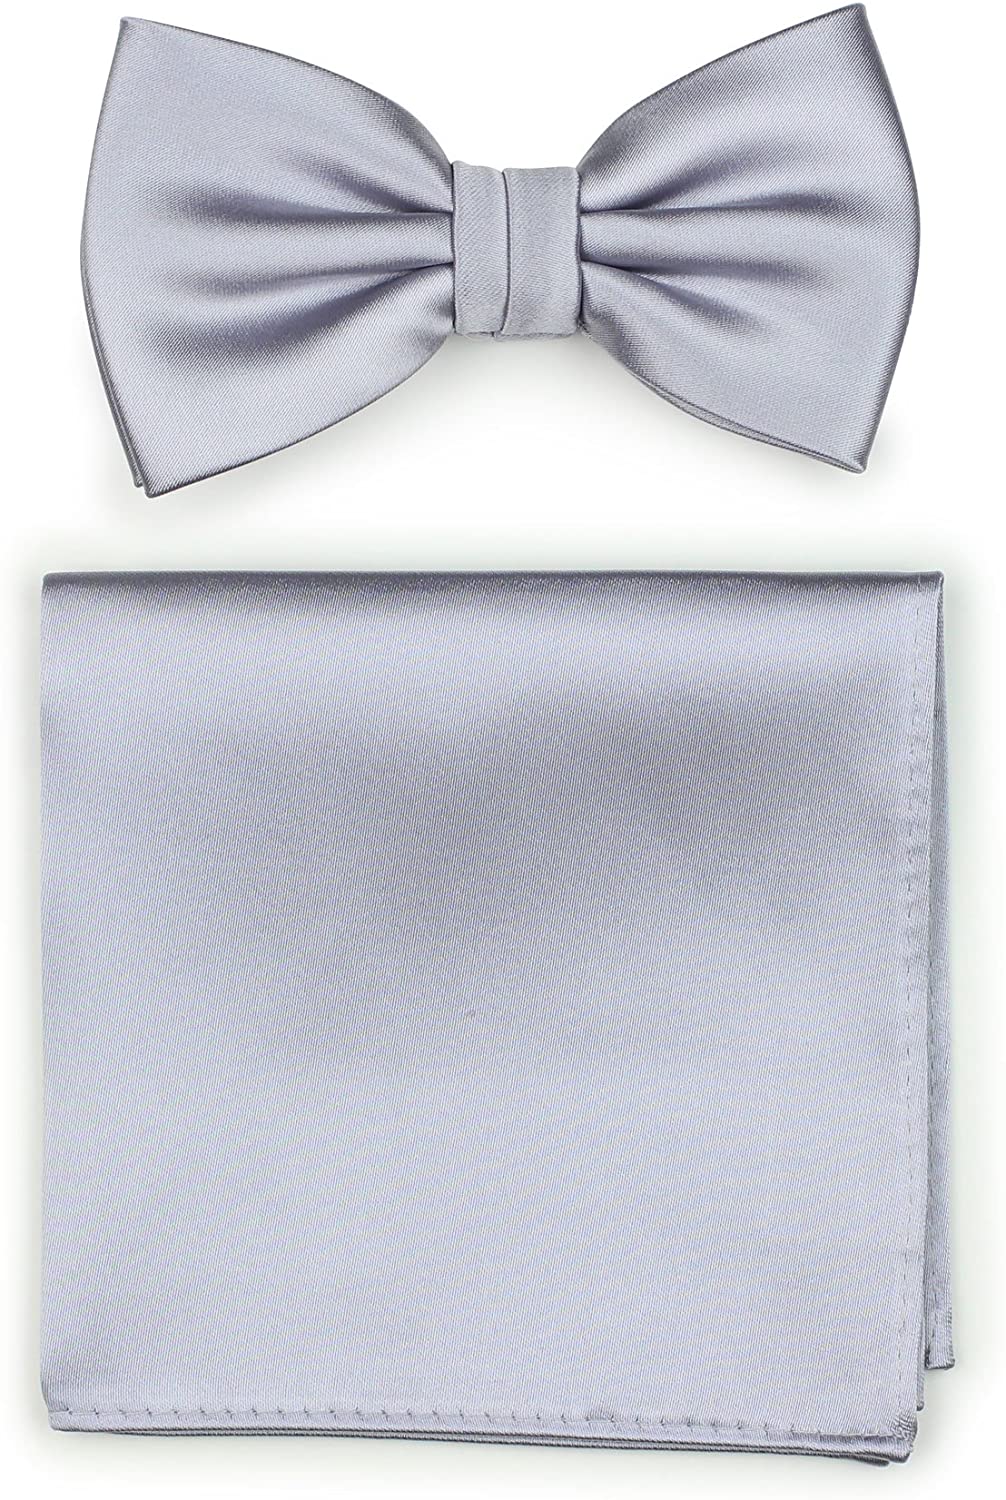 Bows-N-Ties Men's Solid Adjustable Pre-Tied Bow Tie and Pocket Square Set 